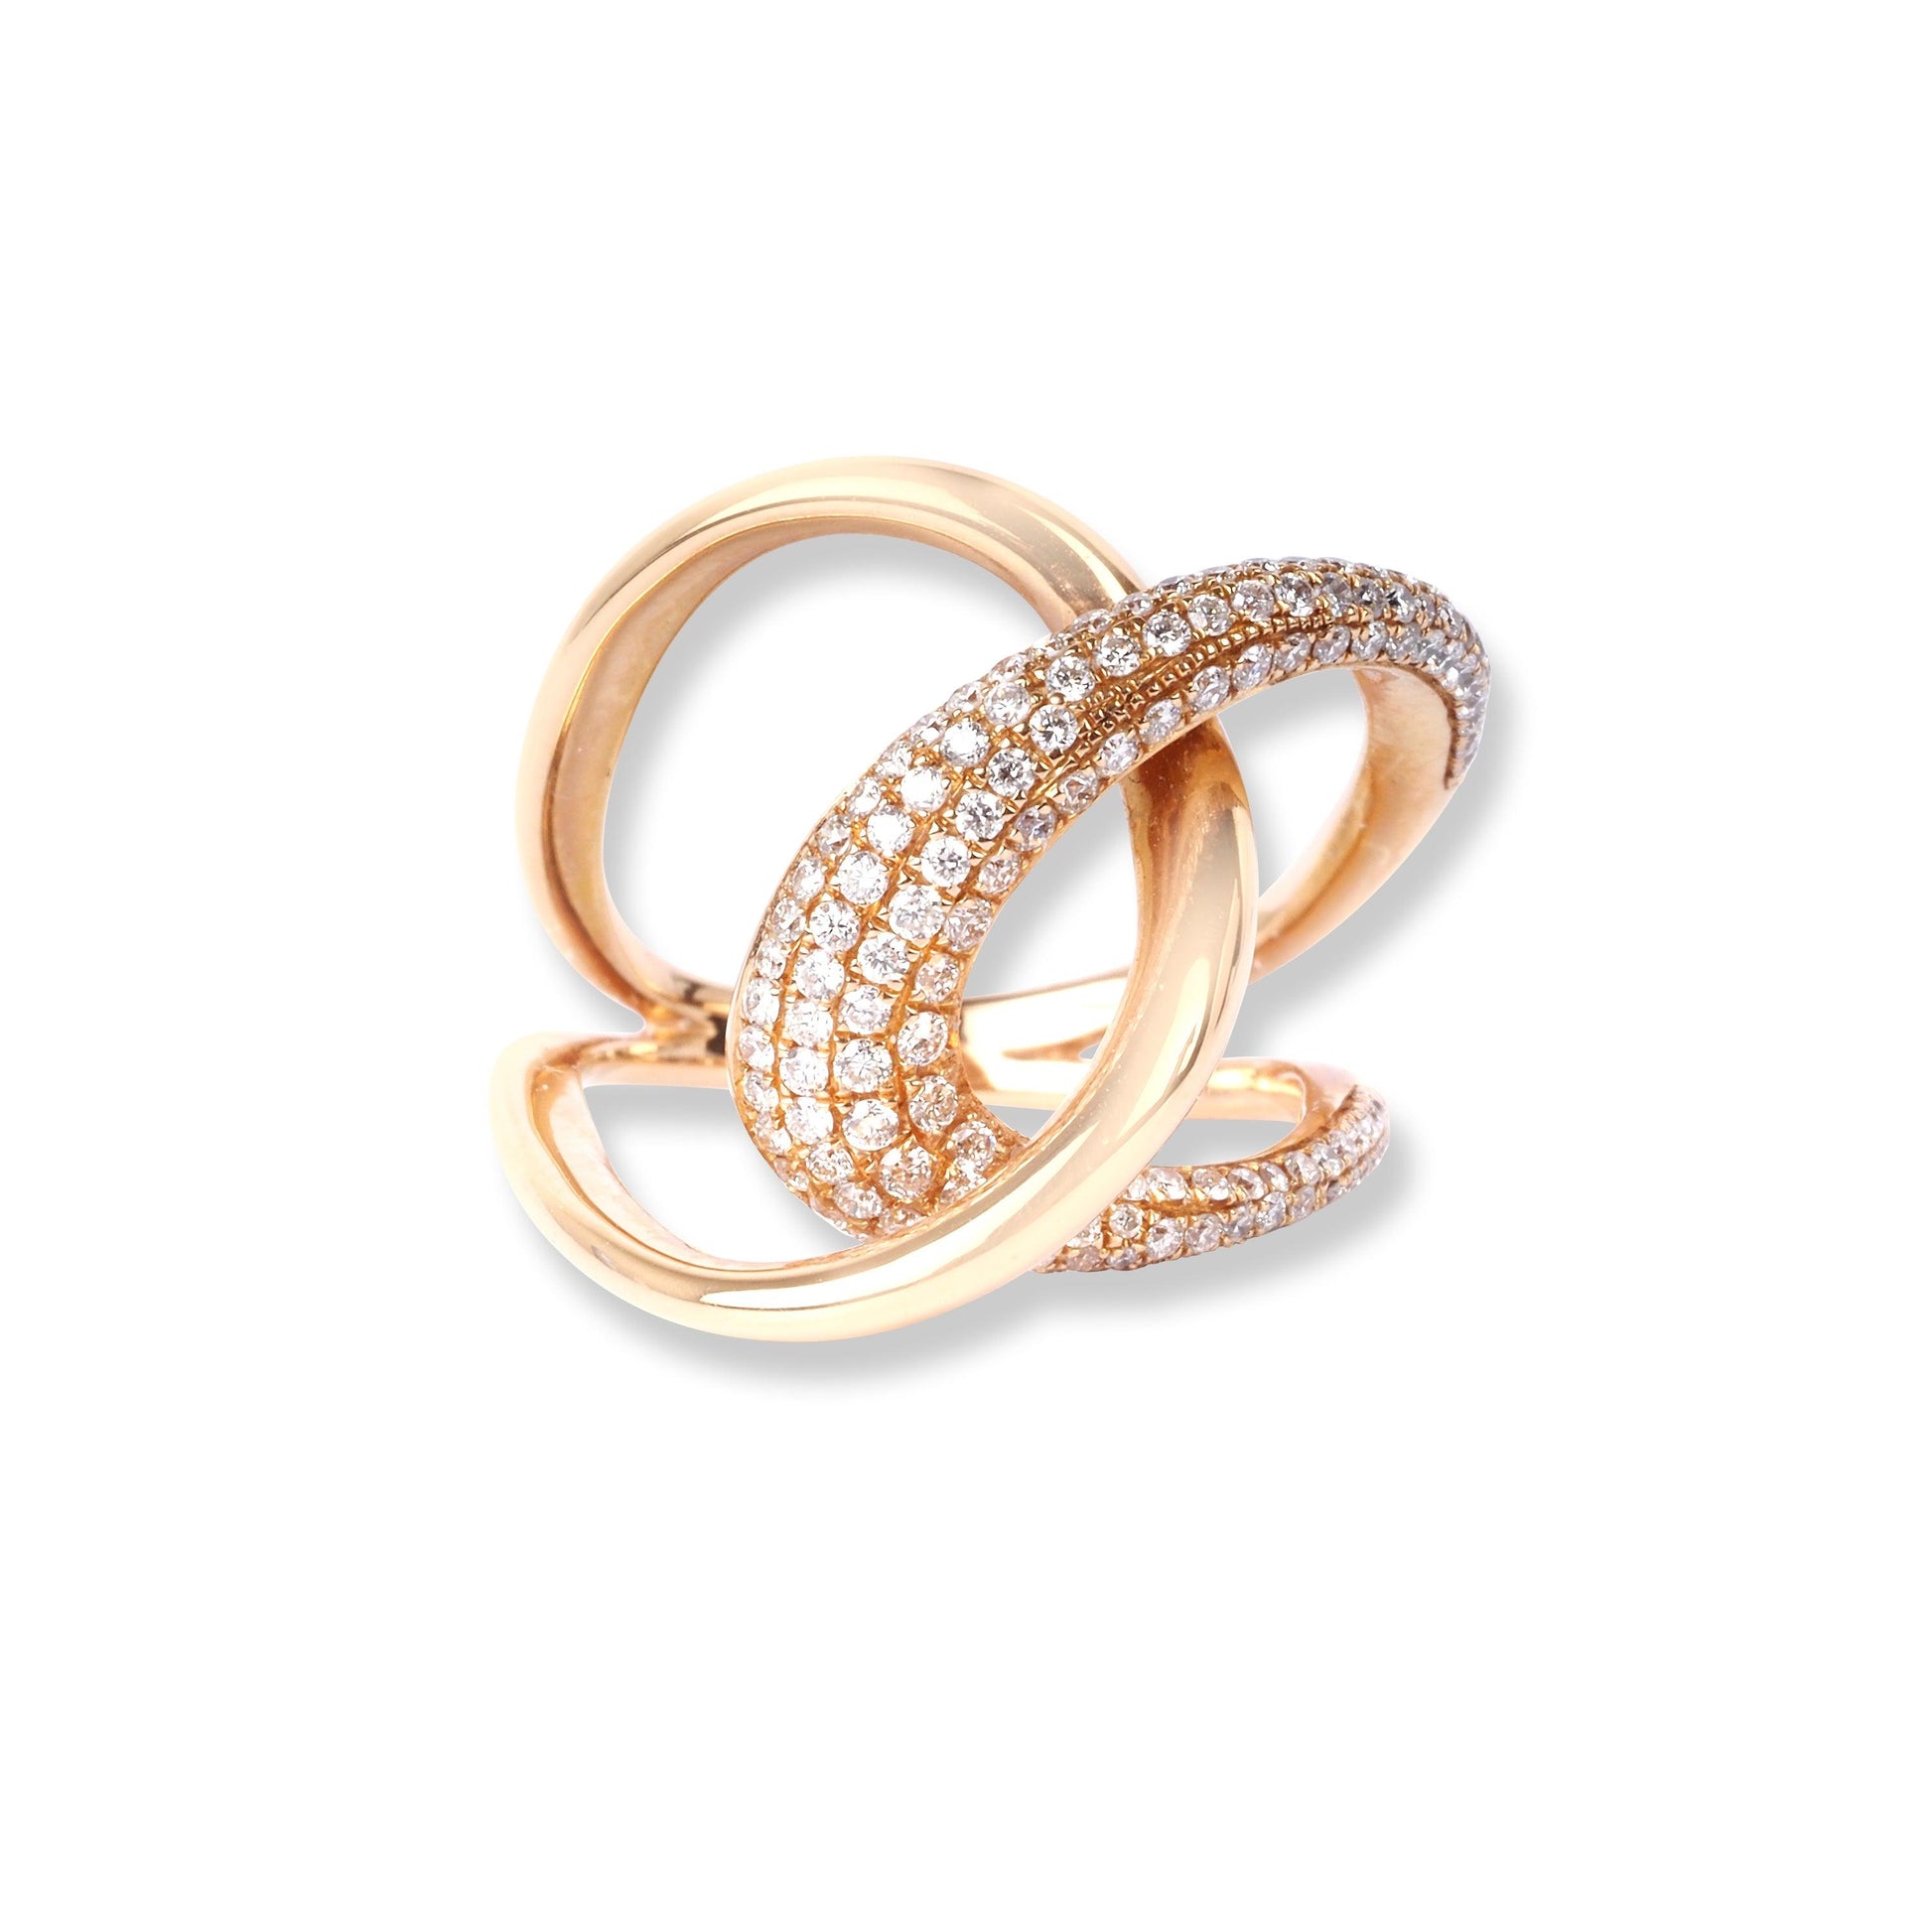 18ct Rose Gold Diamond Dress Ring AR39039-3018 - Minar Jewellers